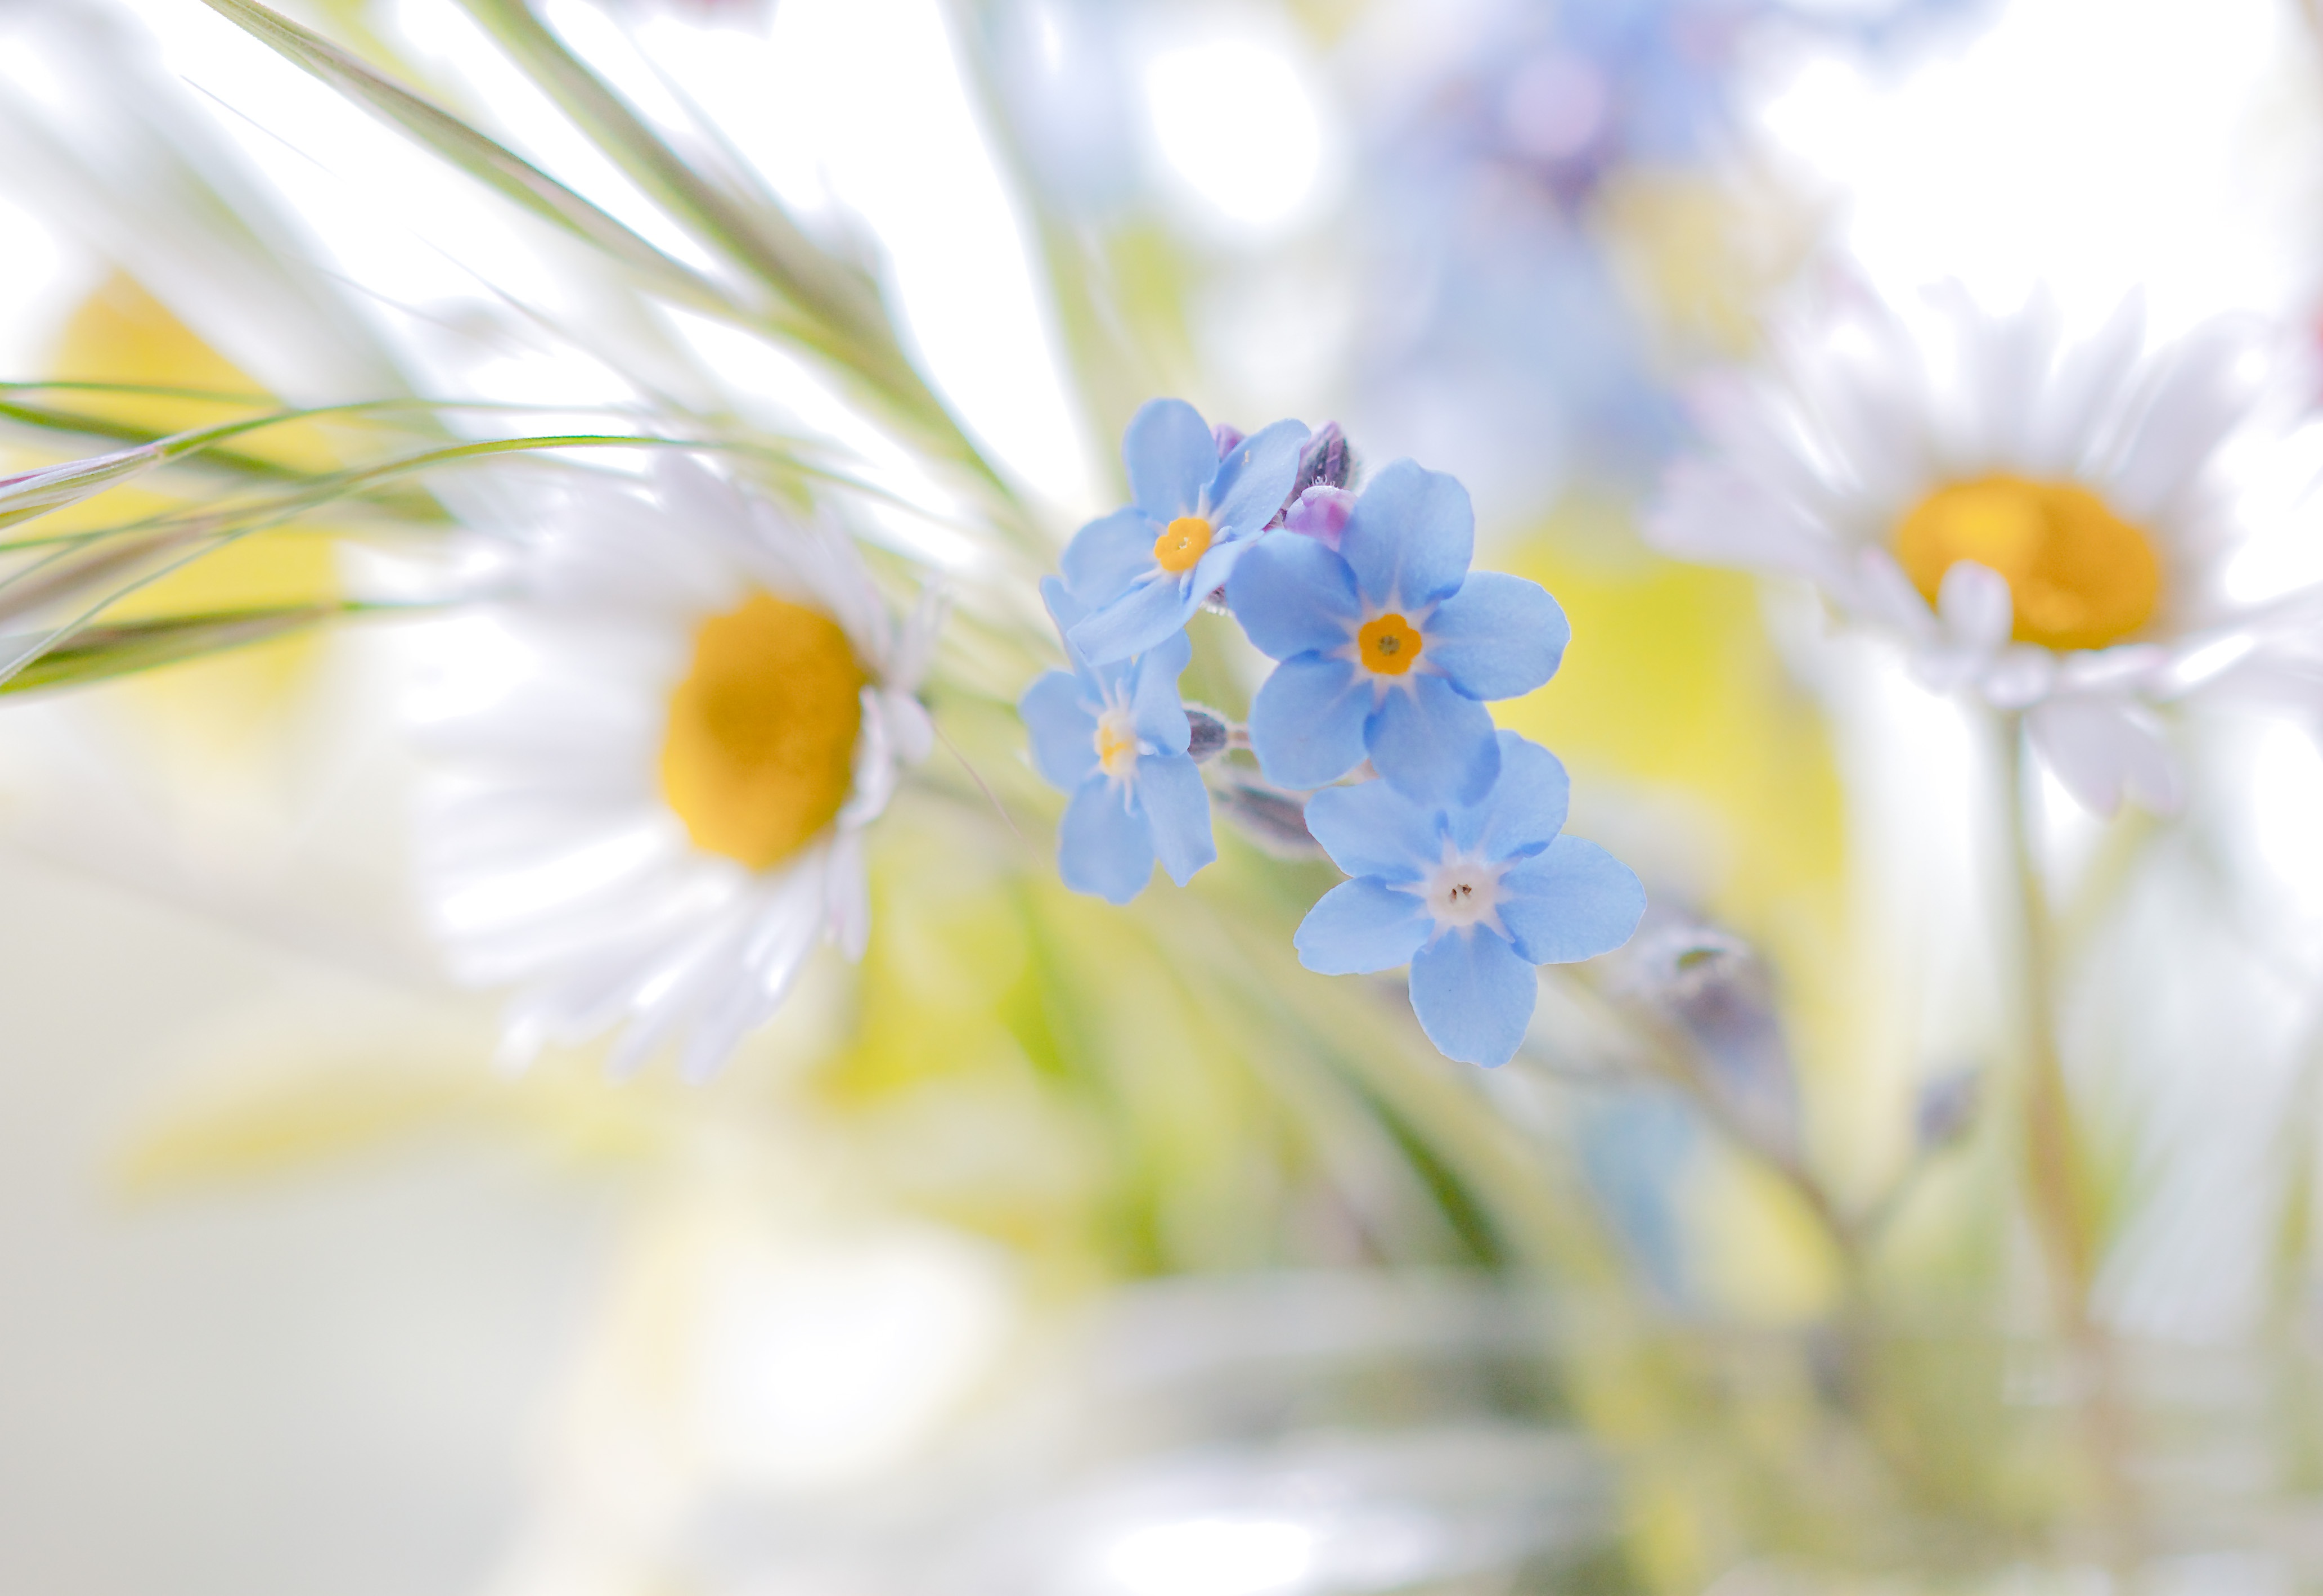 394504 descargar imagen tierra/naturaleza, nomeolvides, flor azul, margarita, flor blanca, flores: fondos de pantalla y protectores de pantalla gratis